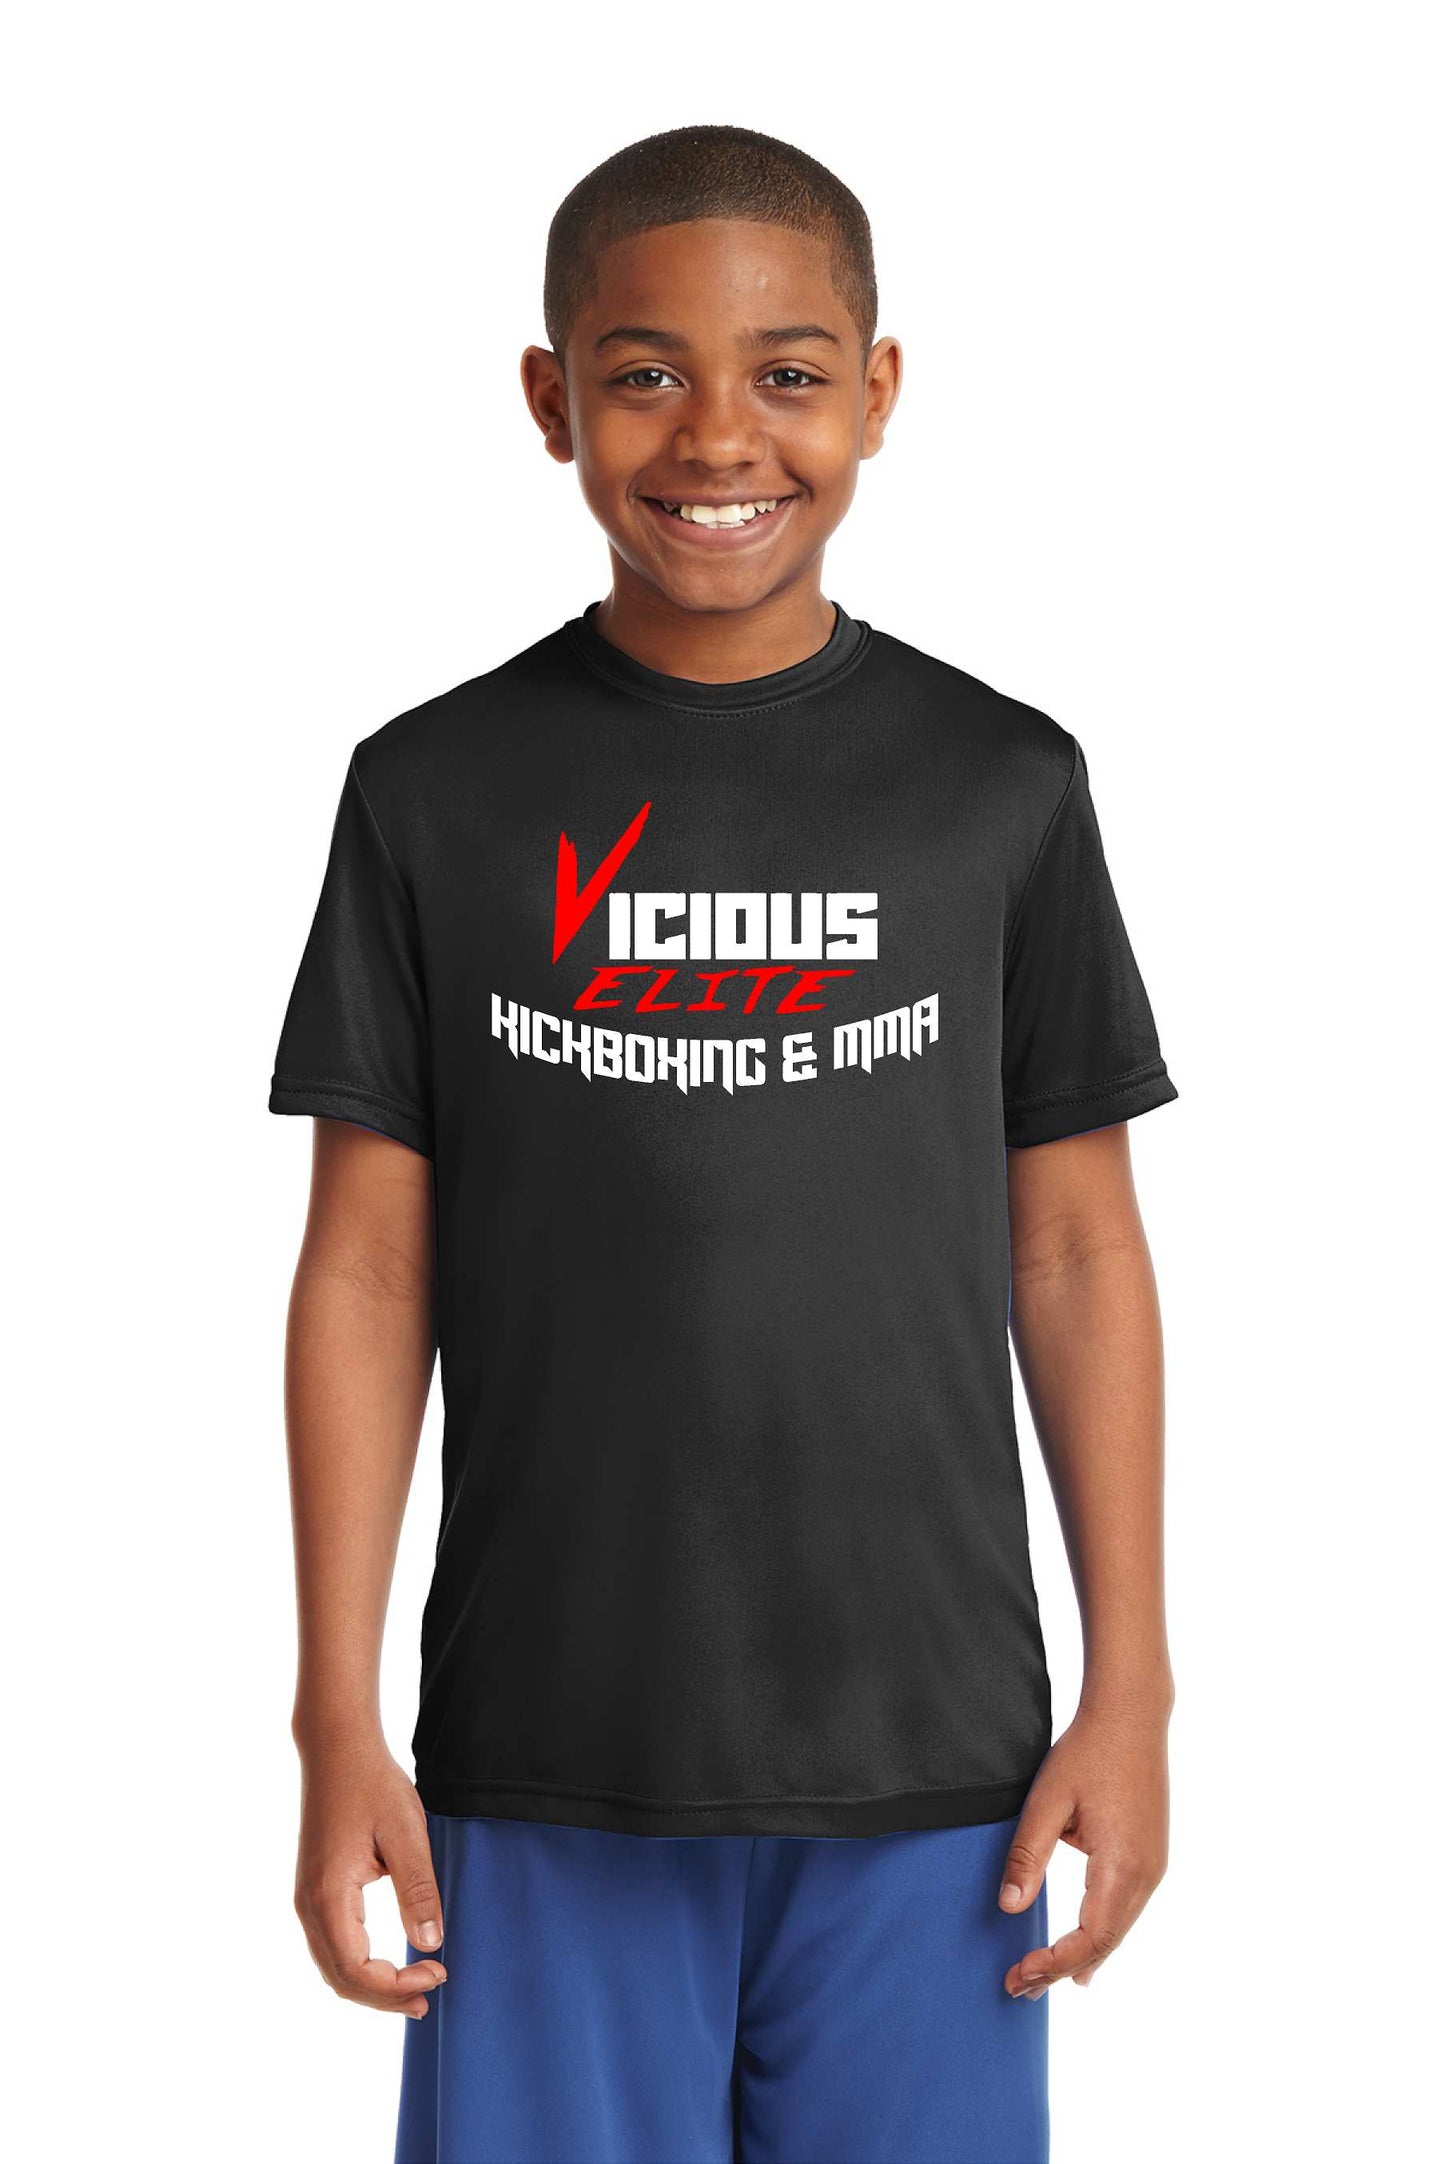 Vicious Elite Kickboxing & MMA Student shirts